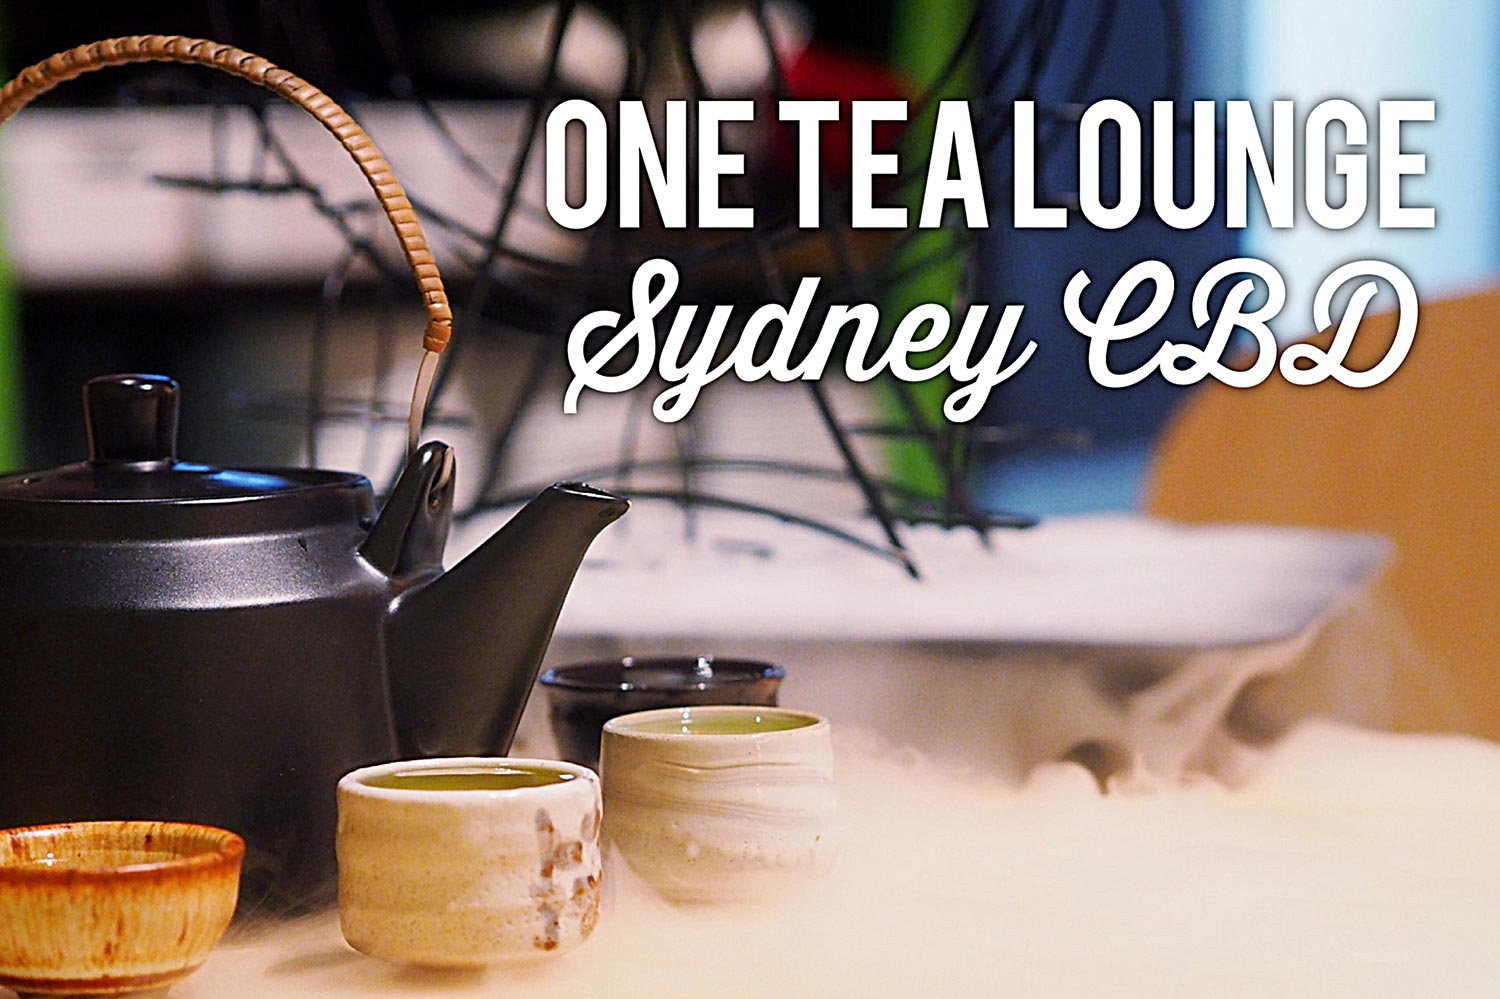 Sydney Food Blog Review of One Tea Lounge, Sydney CBD